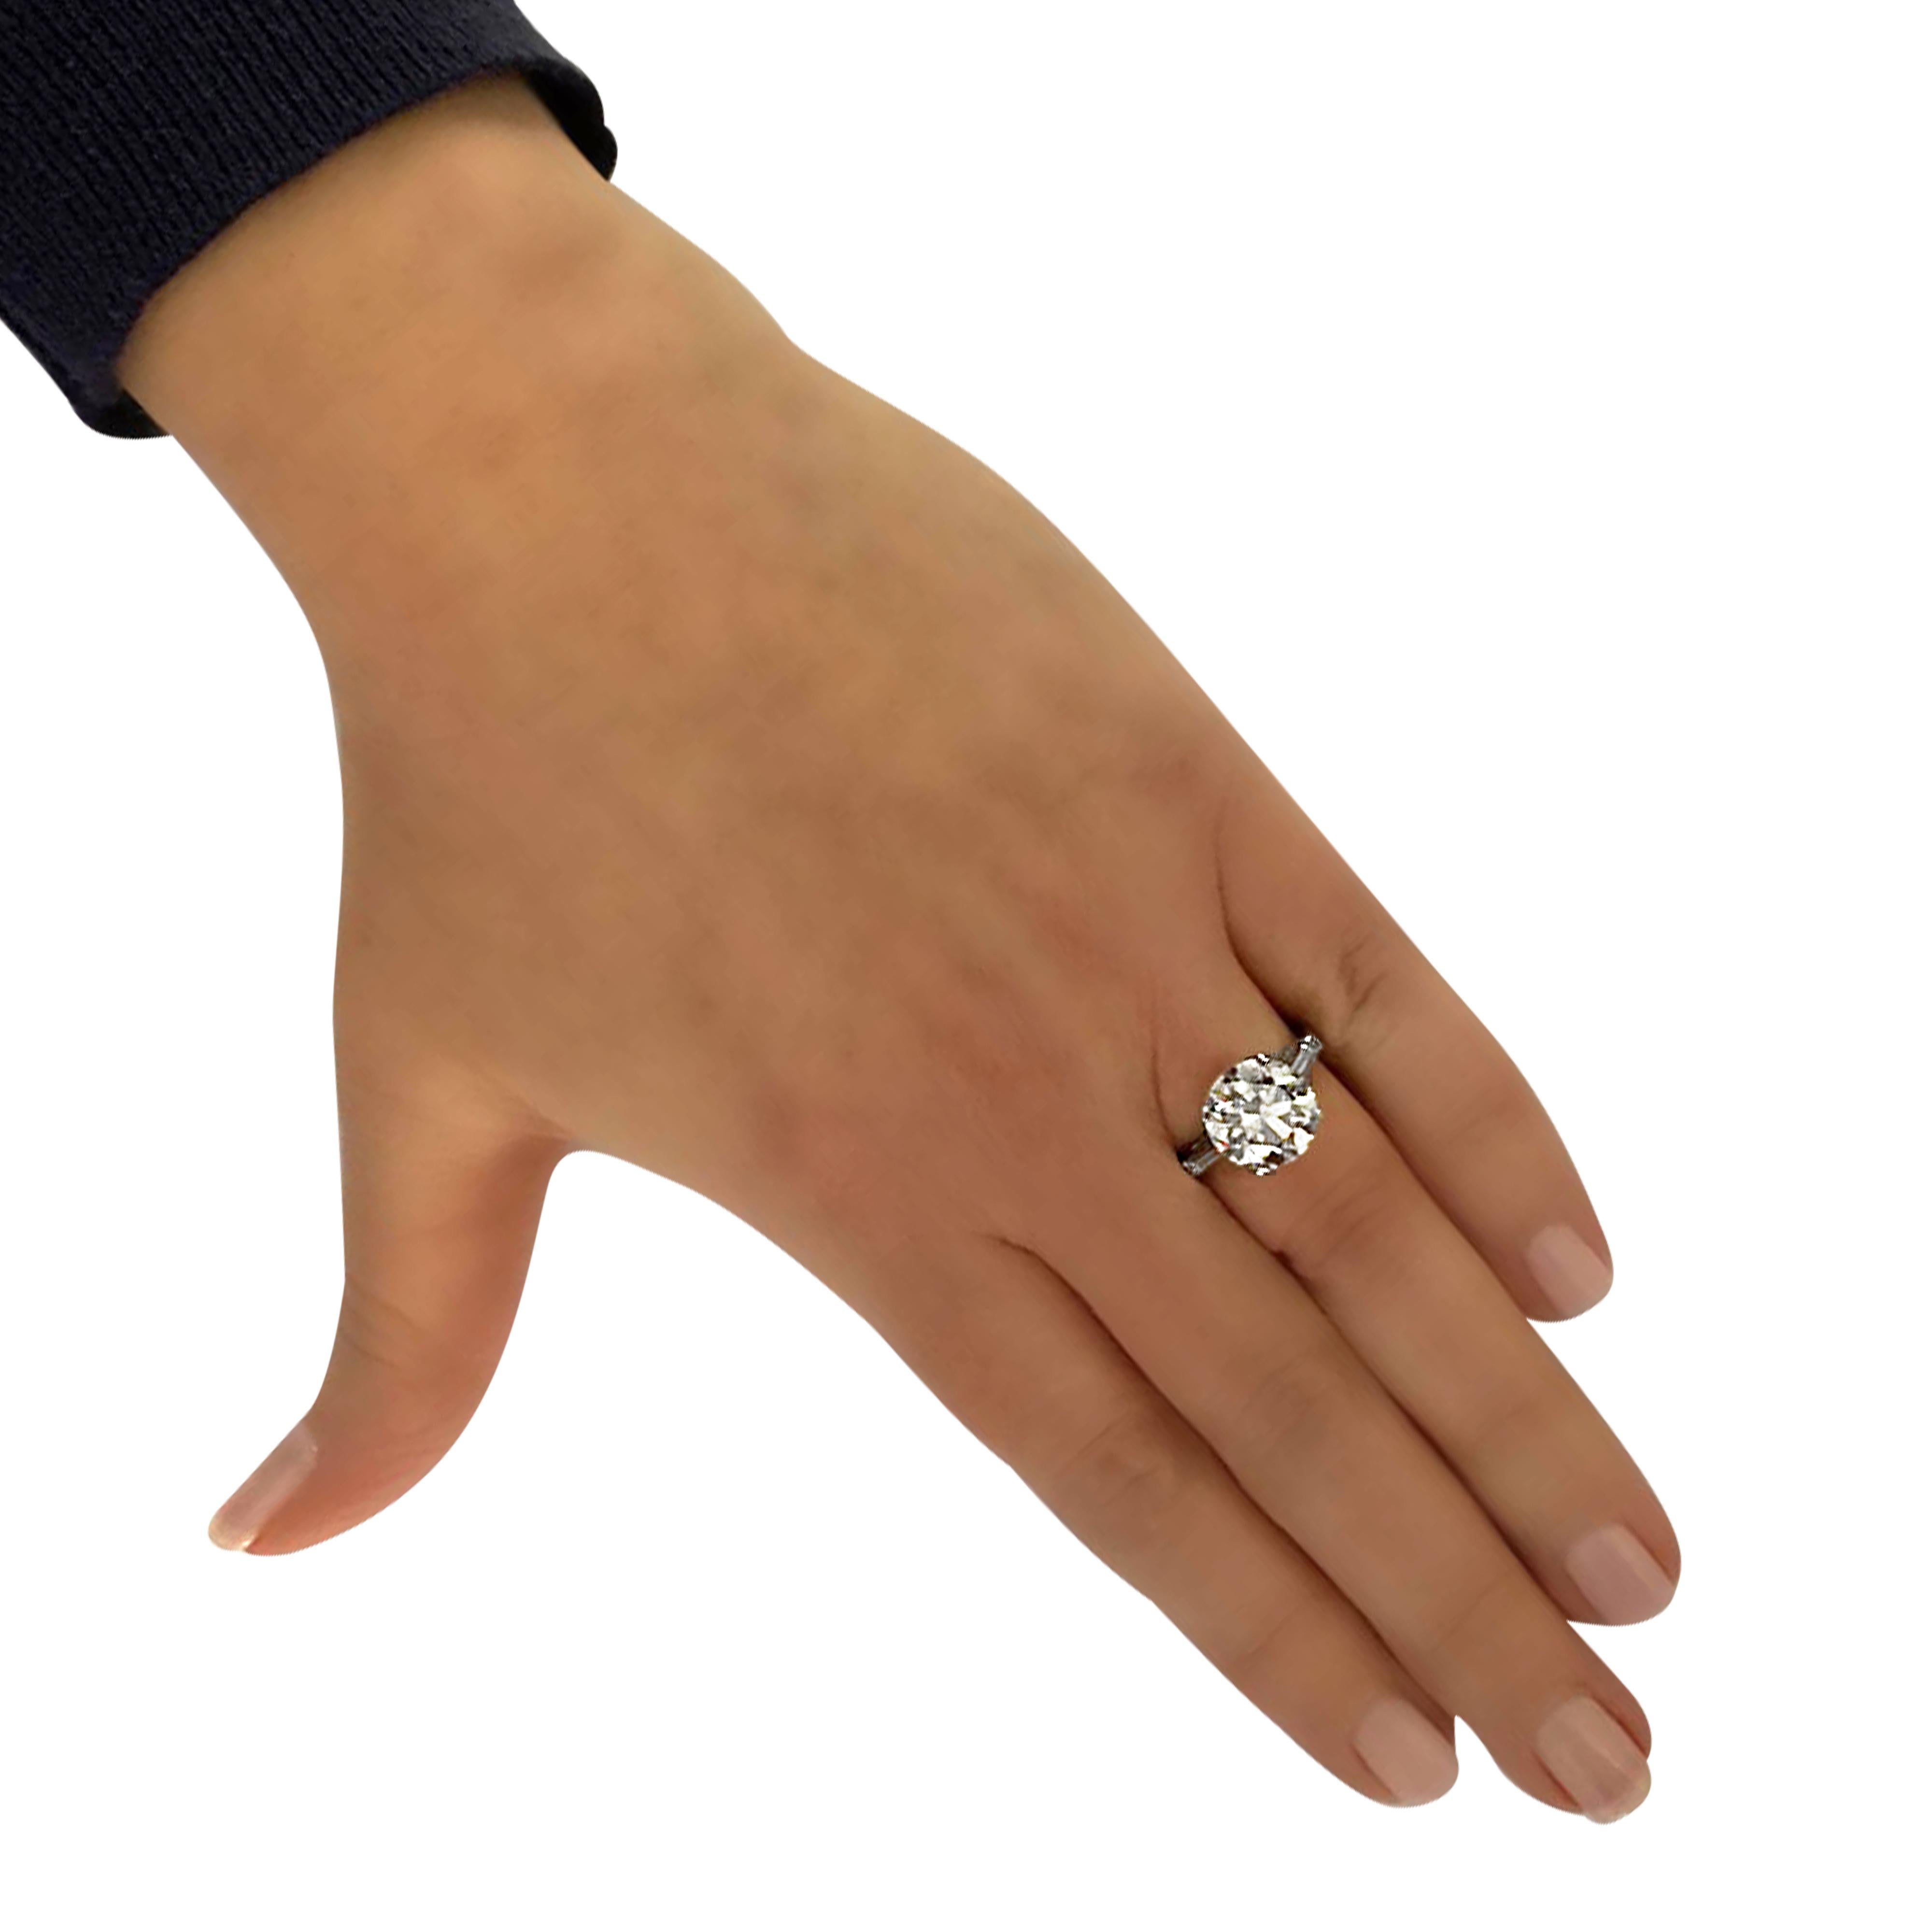 Round Cut Vivid Diamonds GIA Certified 3.92 Carat Diamond Engagement Ring